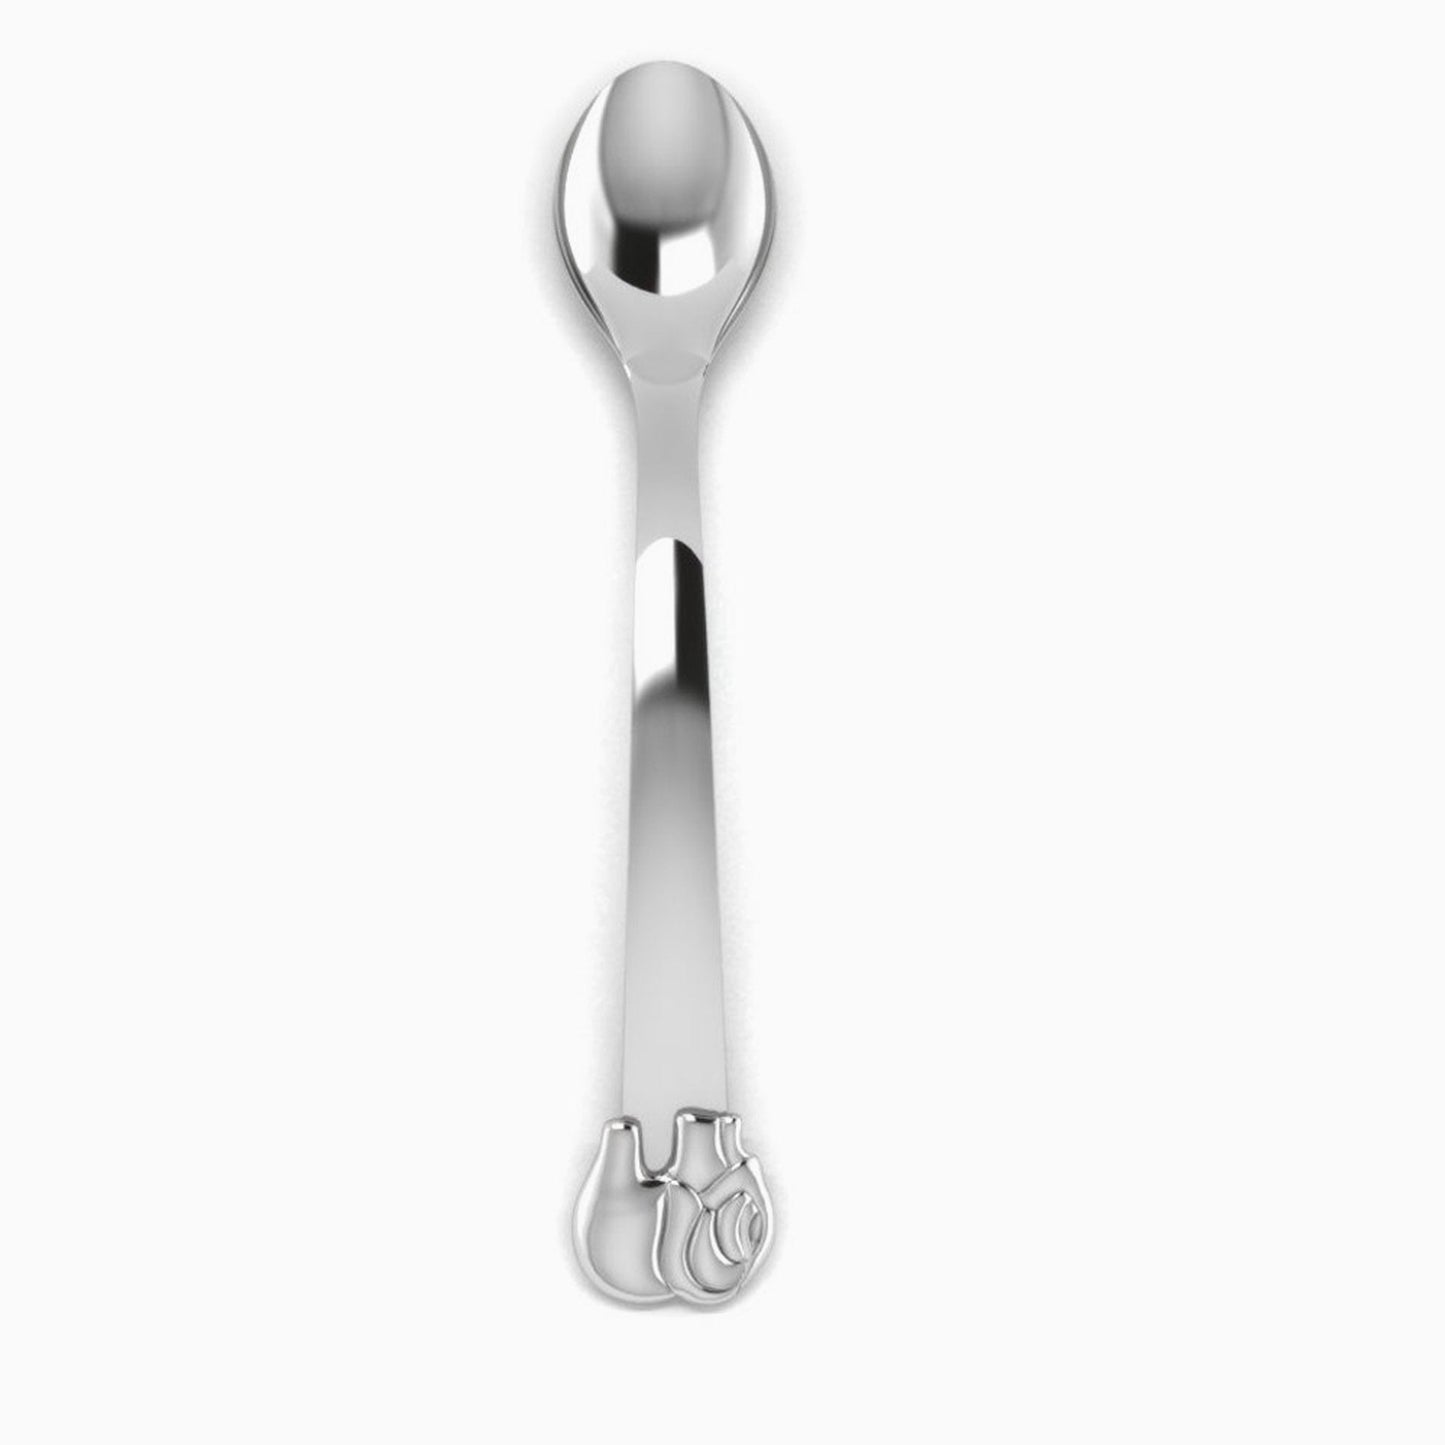 Sterling Silver Elephant Baby Feeding Spoon by Krysaliis